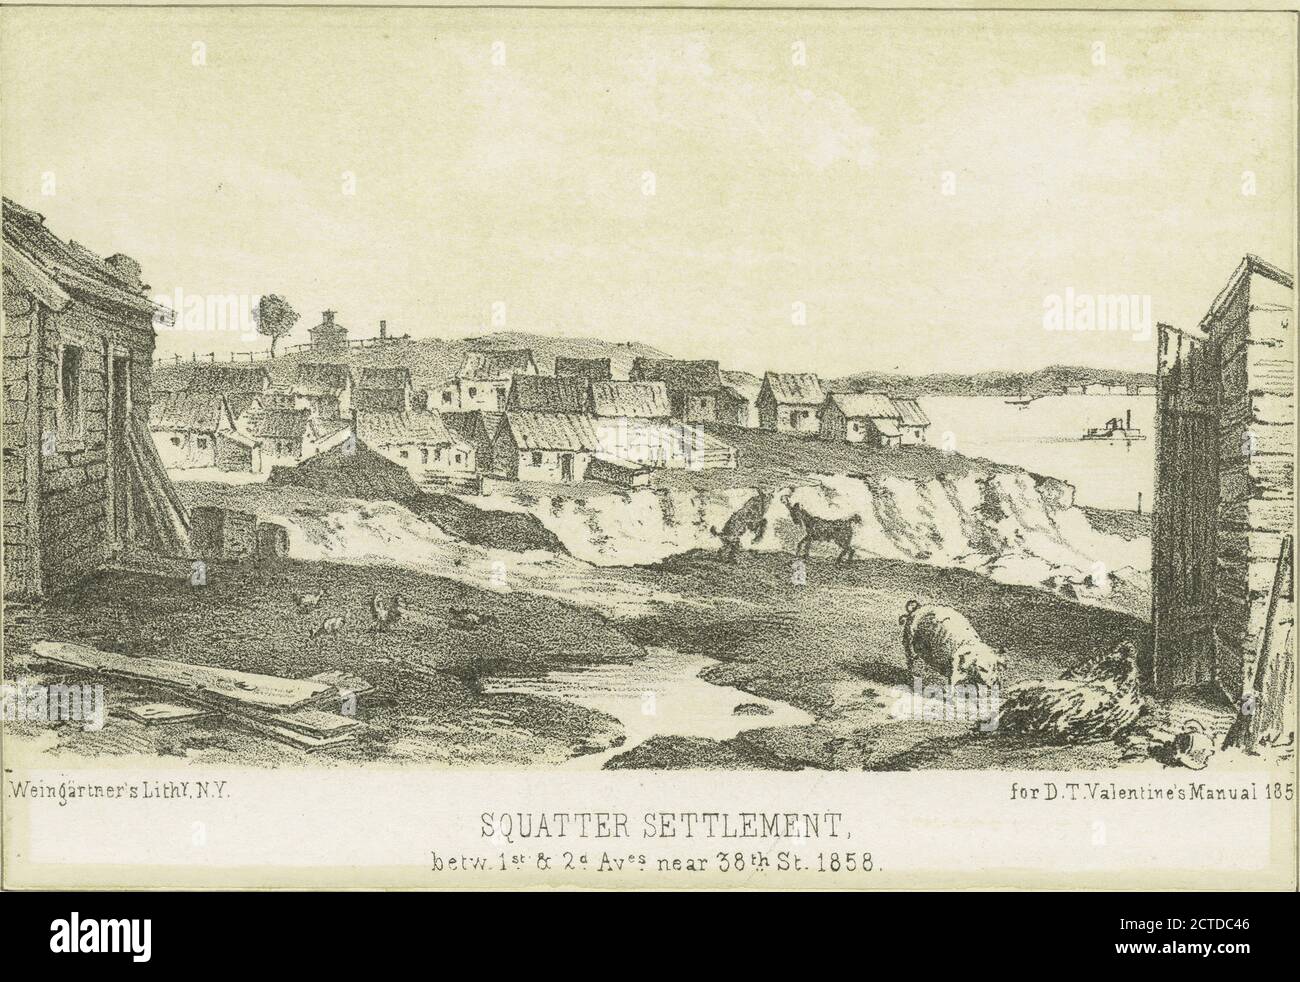 Squatter settlement betw. 1st & 2d. Aves. near 38th St. 1858, still image, Prints, 1828 - 1890 Stock Photo